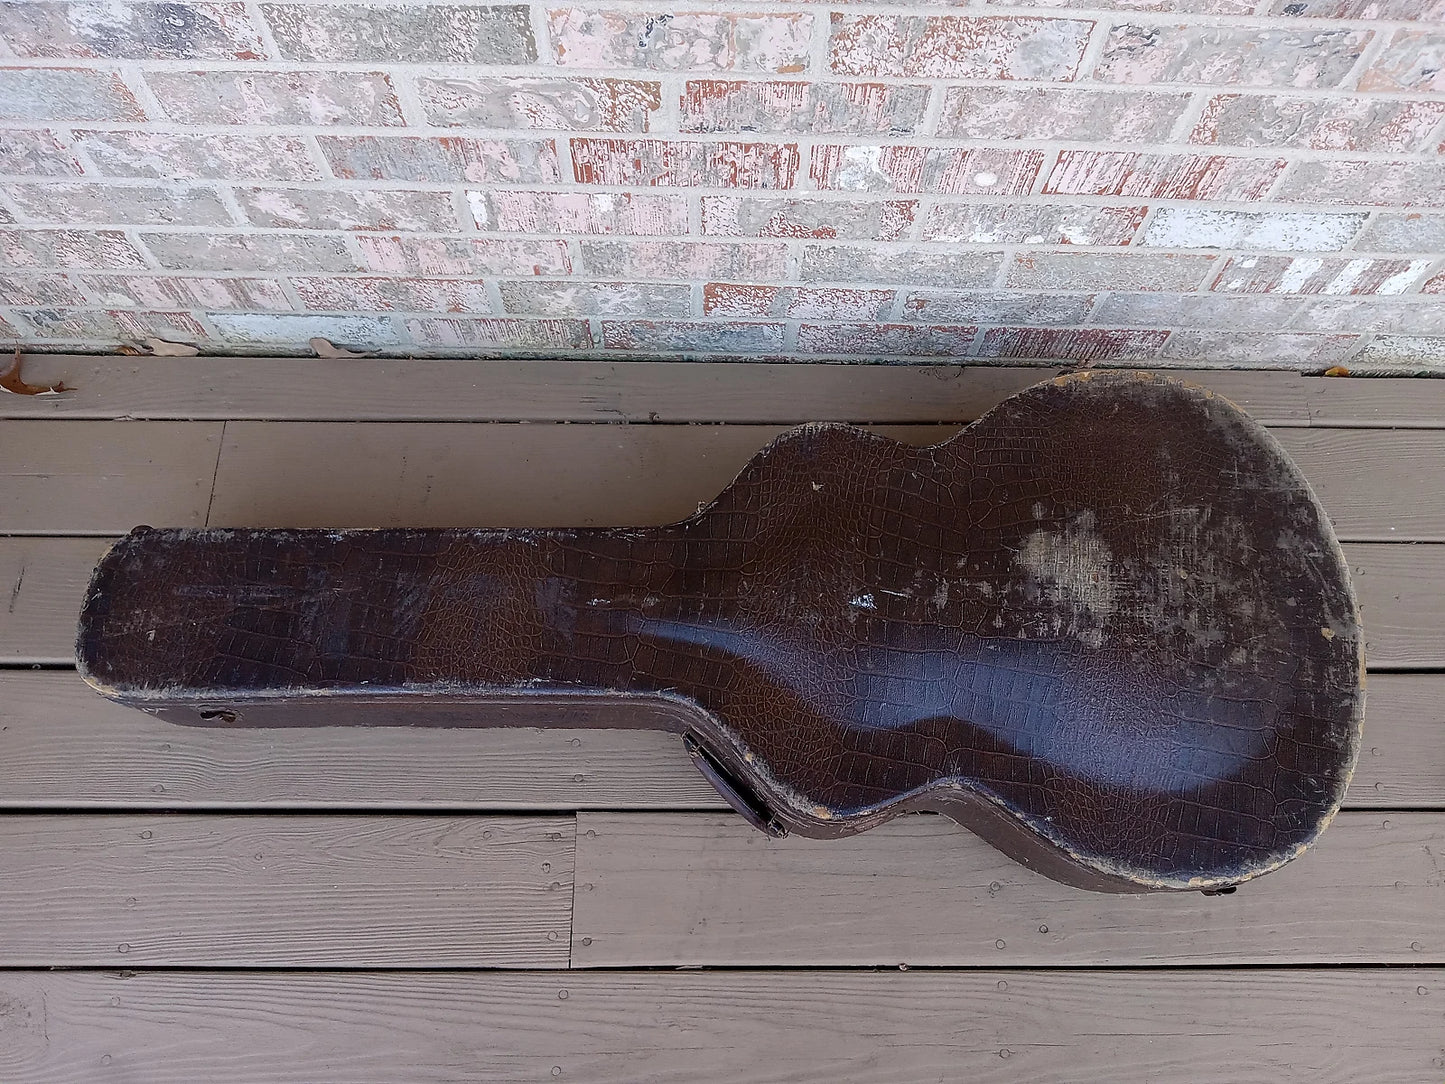 Kay K-23 Jumbo Acoustic Guitar 1950s w/ Lifton Hardshell Case - Natural - Fair Condition